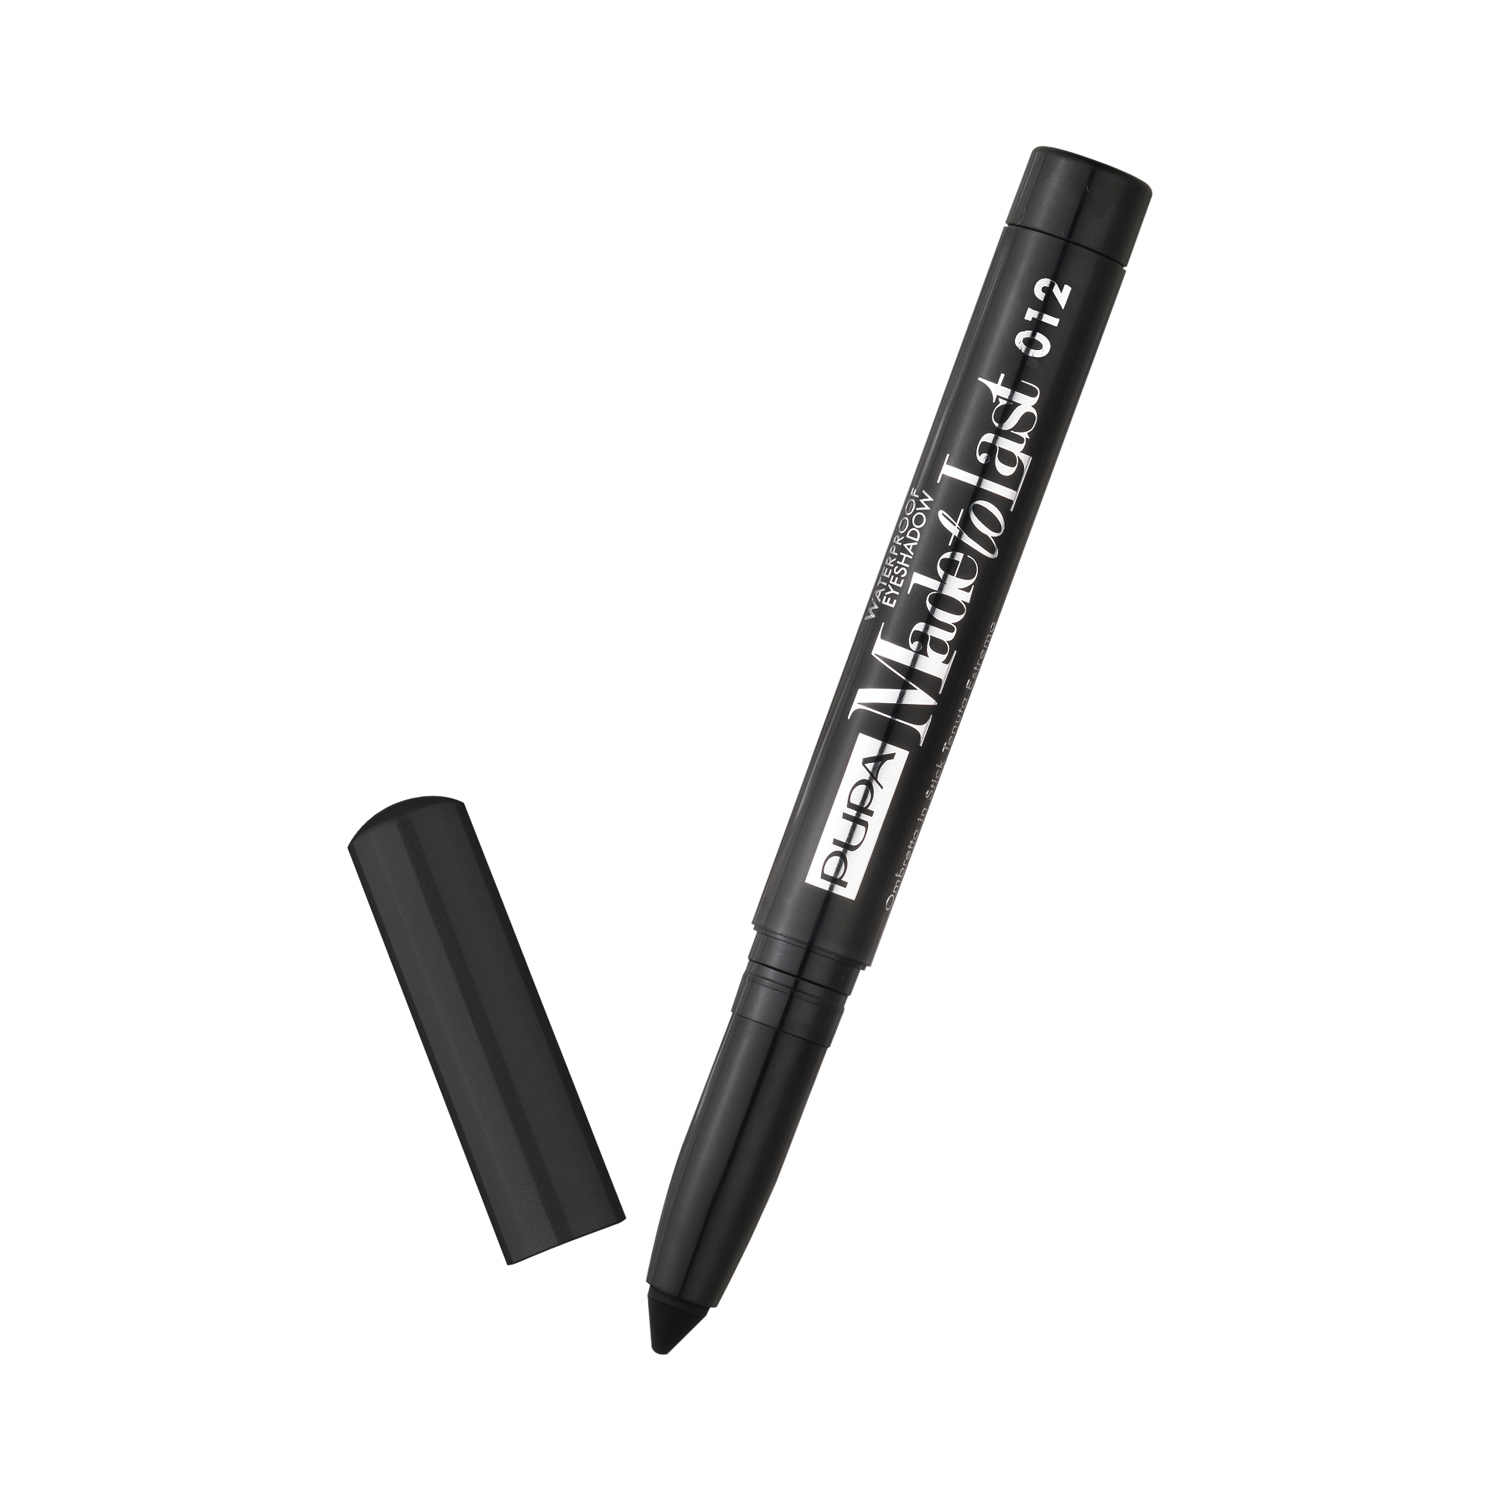 Pupa Milano | Pupa Milano Made To Last Waterproof Long Lasting Stick Eyeshadow - 012 Extra Black (1.4g)